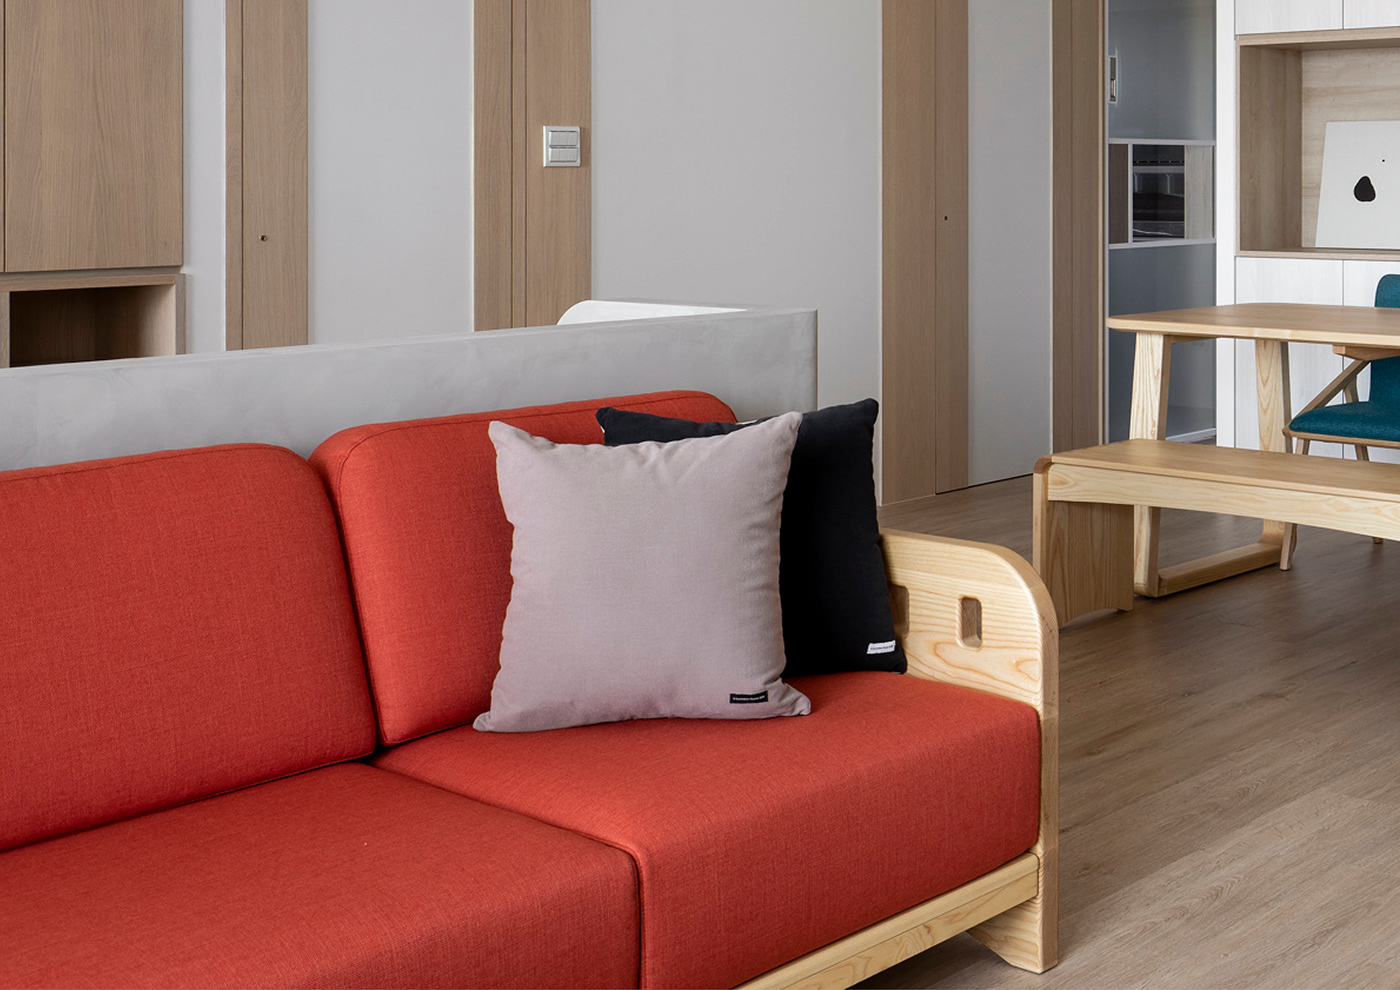 furniture design  industrial design  wooden sofa modular design sofa Couch furniture